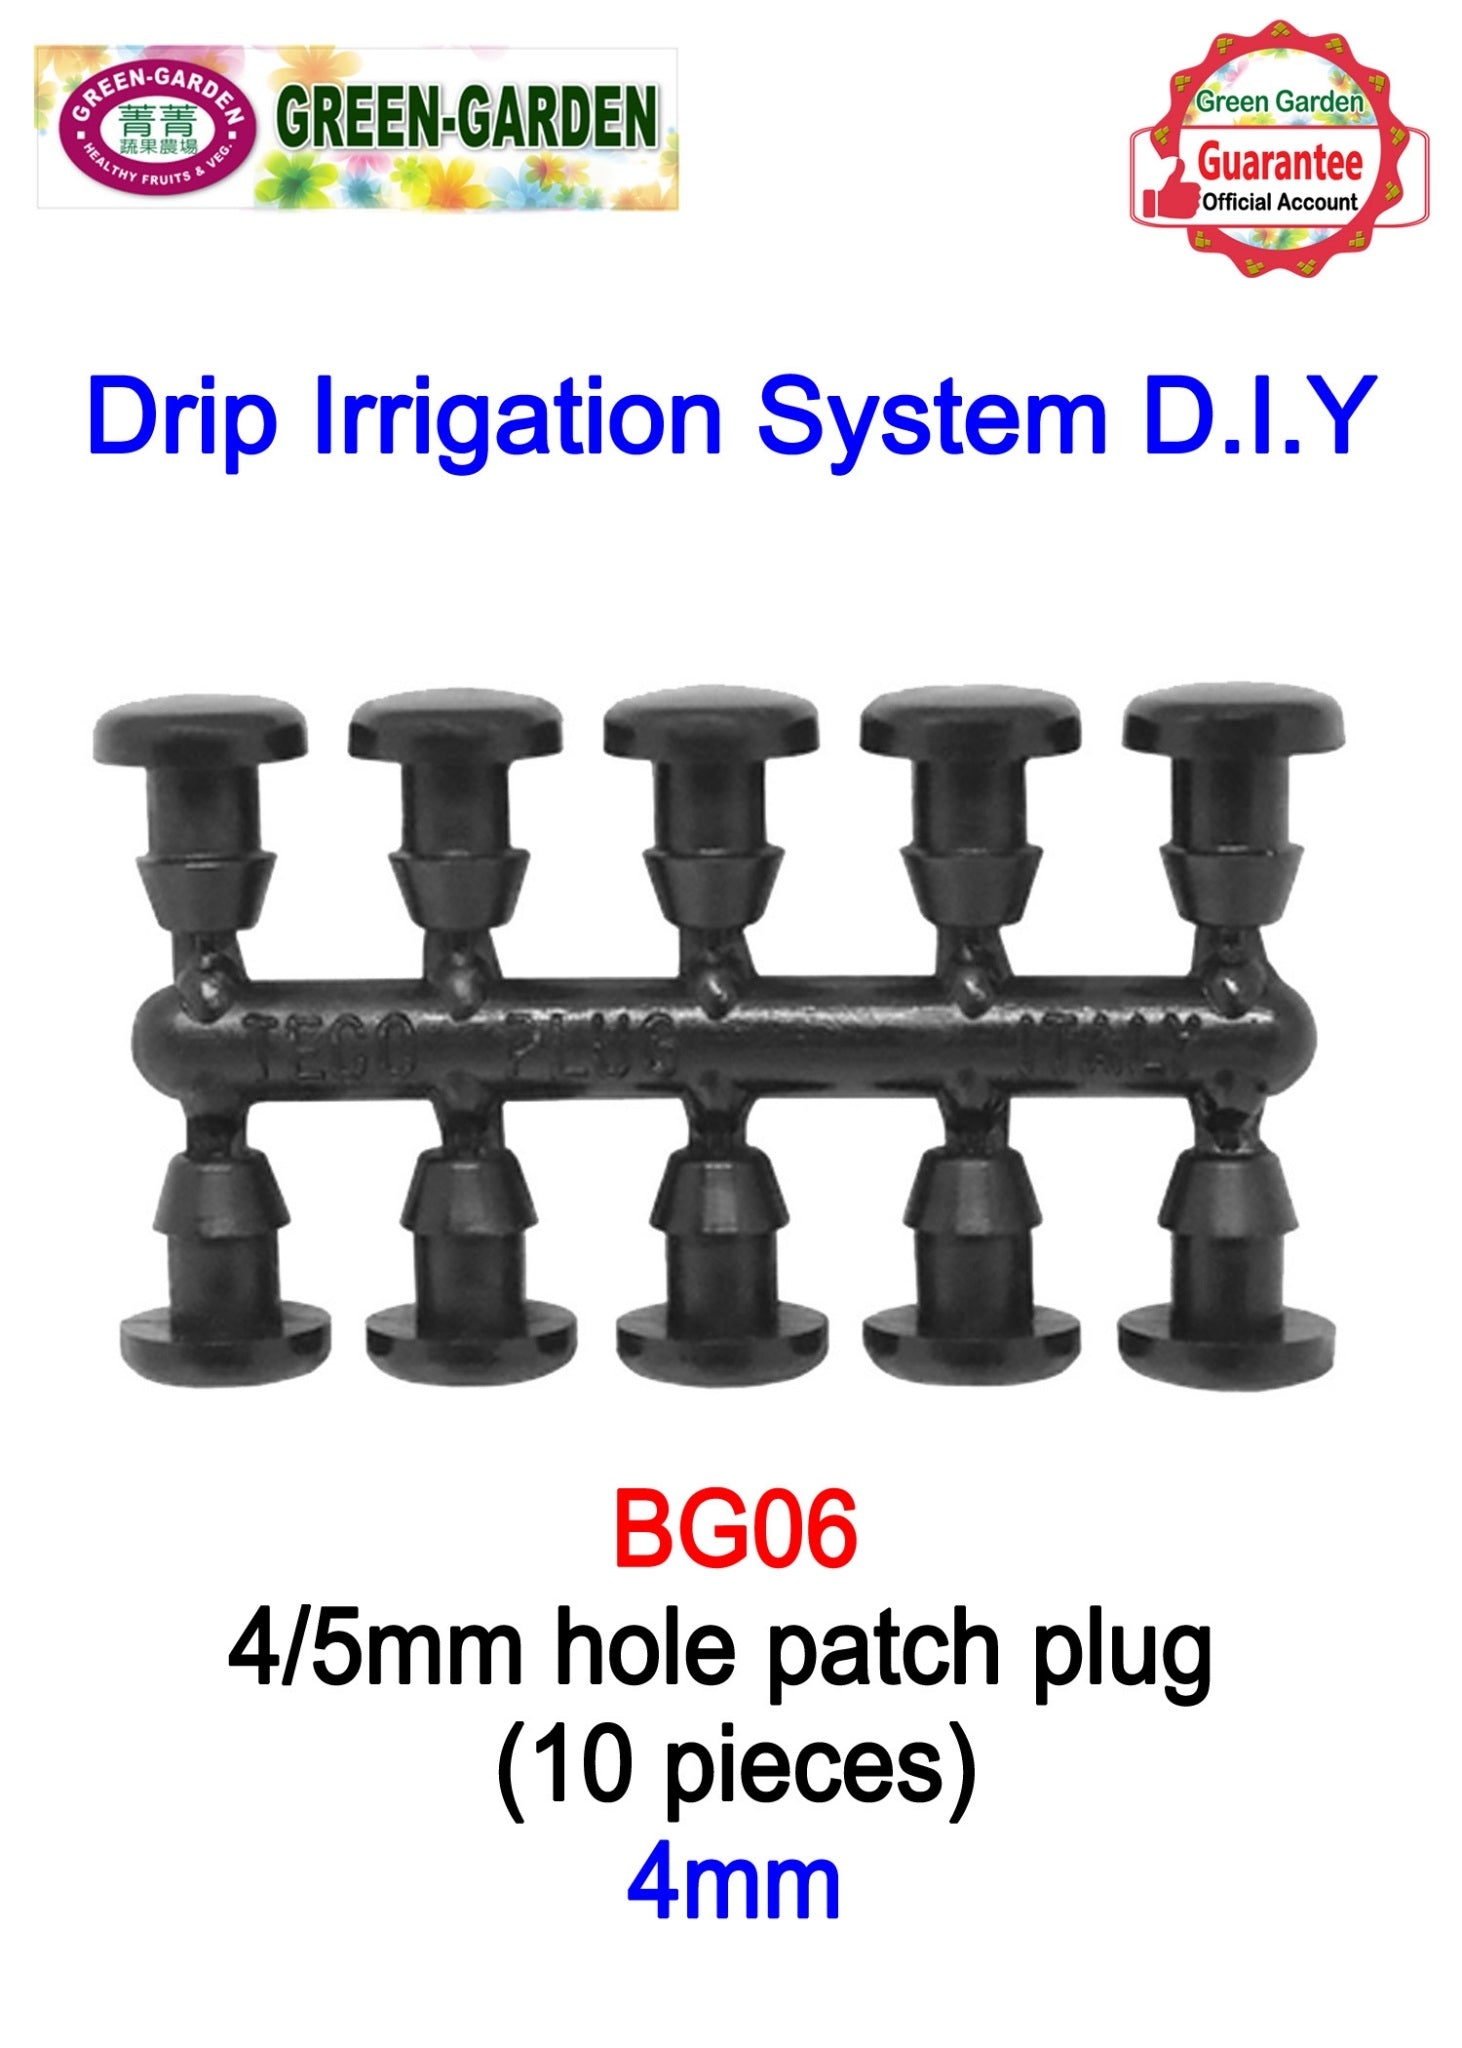 Drip Irrigation System - 4/5mm Hole Filling Plug (10 pieces) BG06